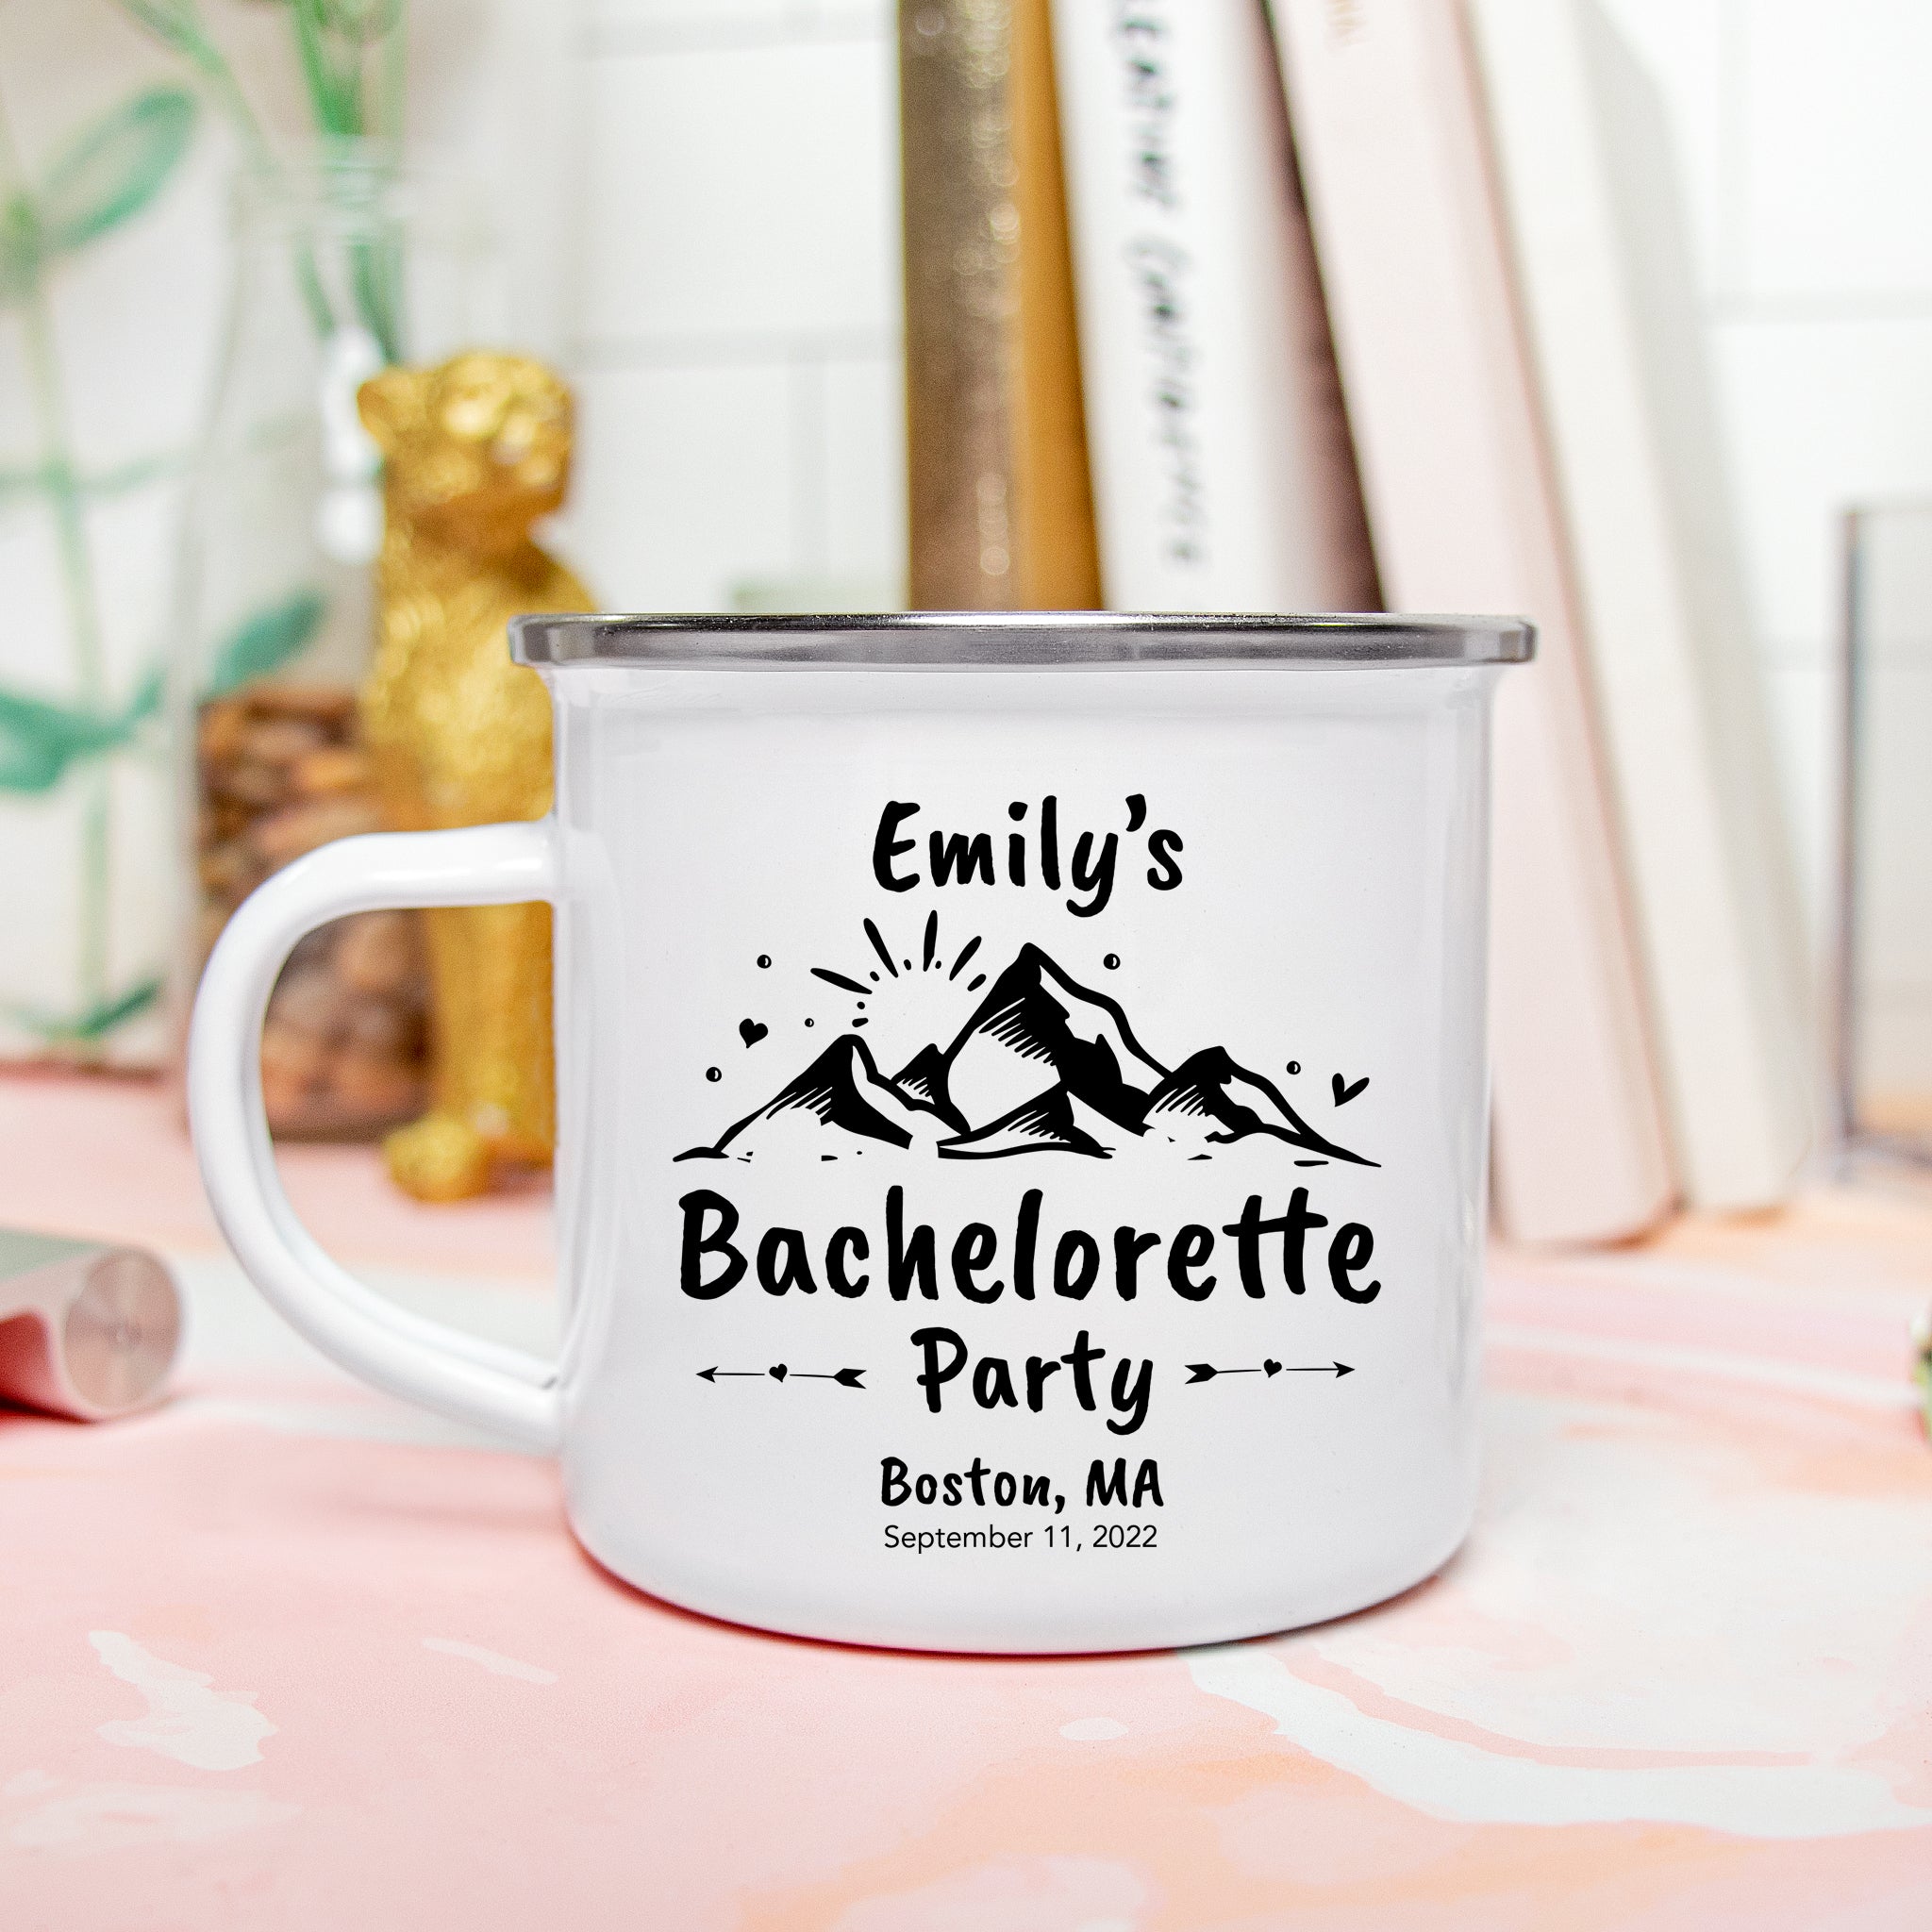 Bachelorette Personalized Enamel Mug